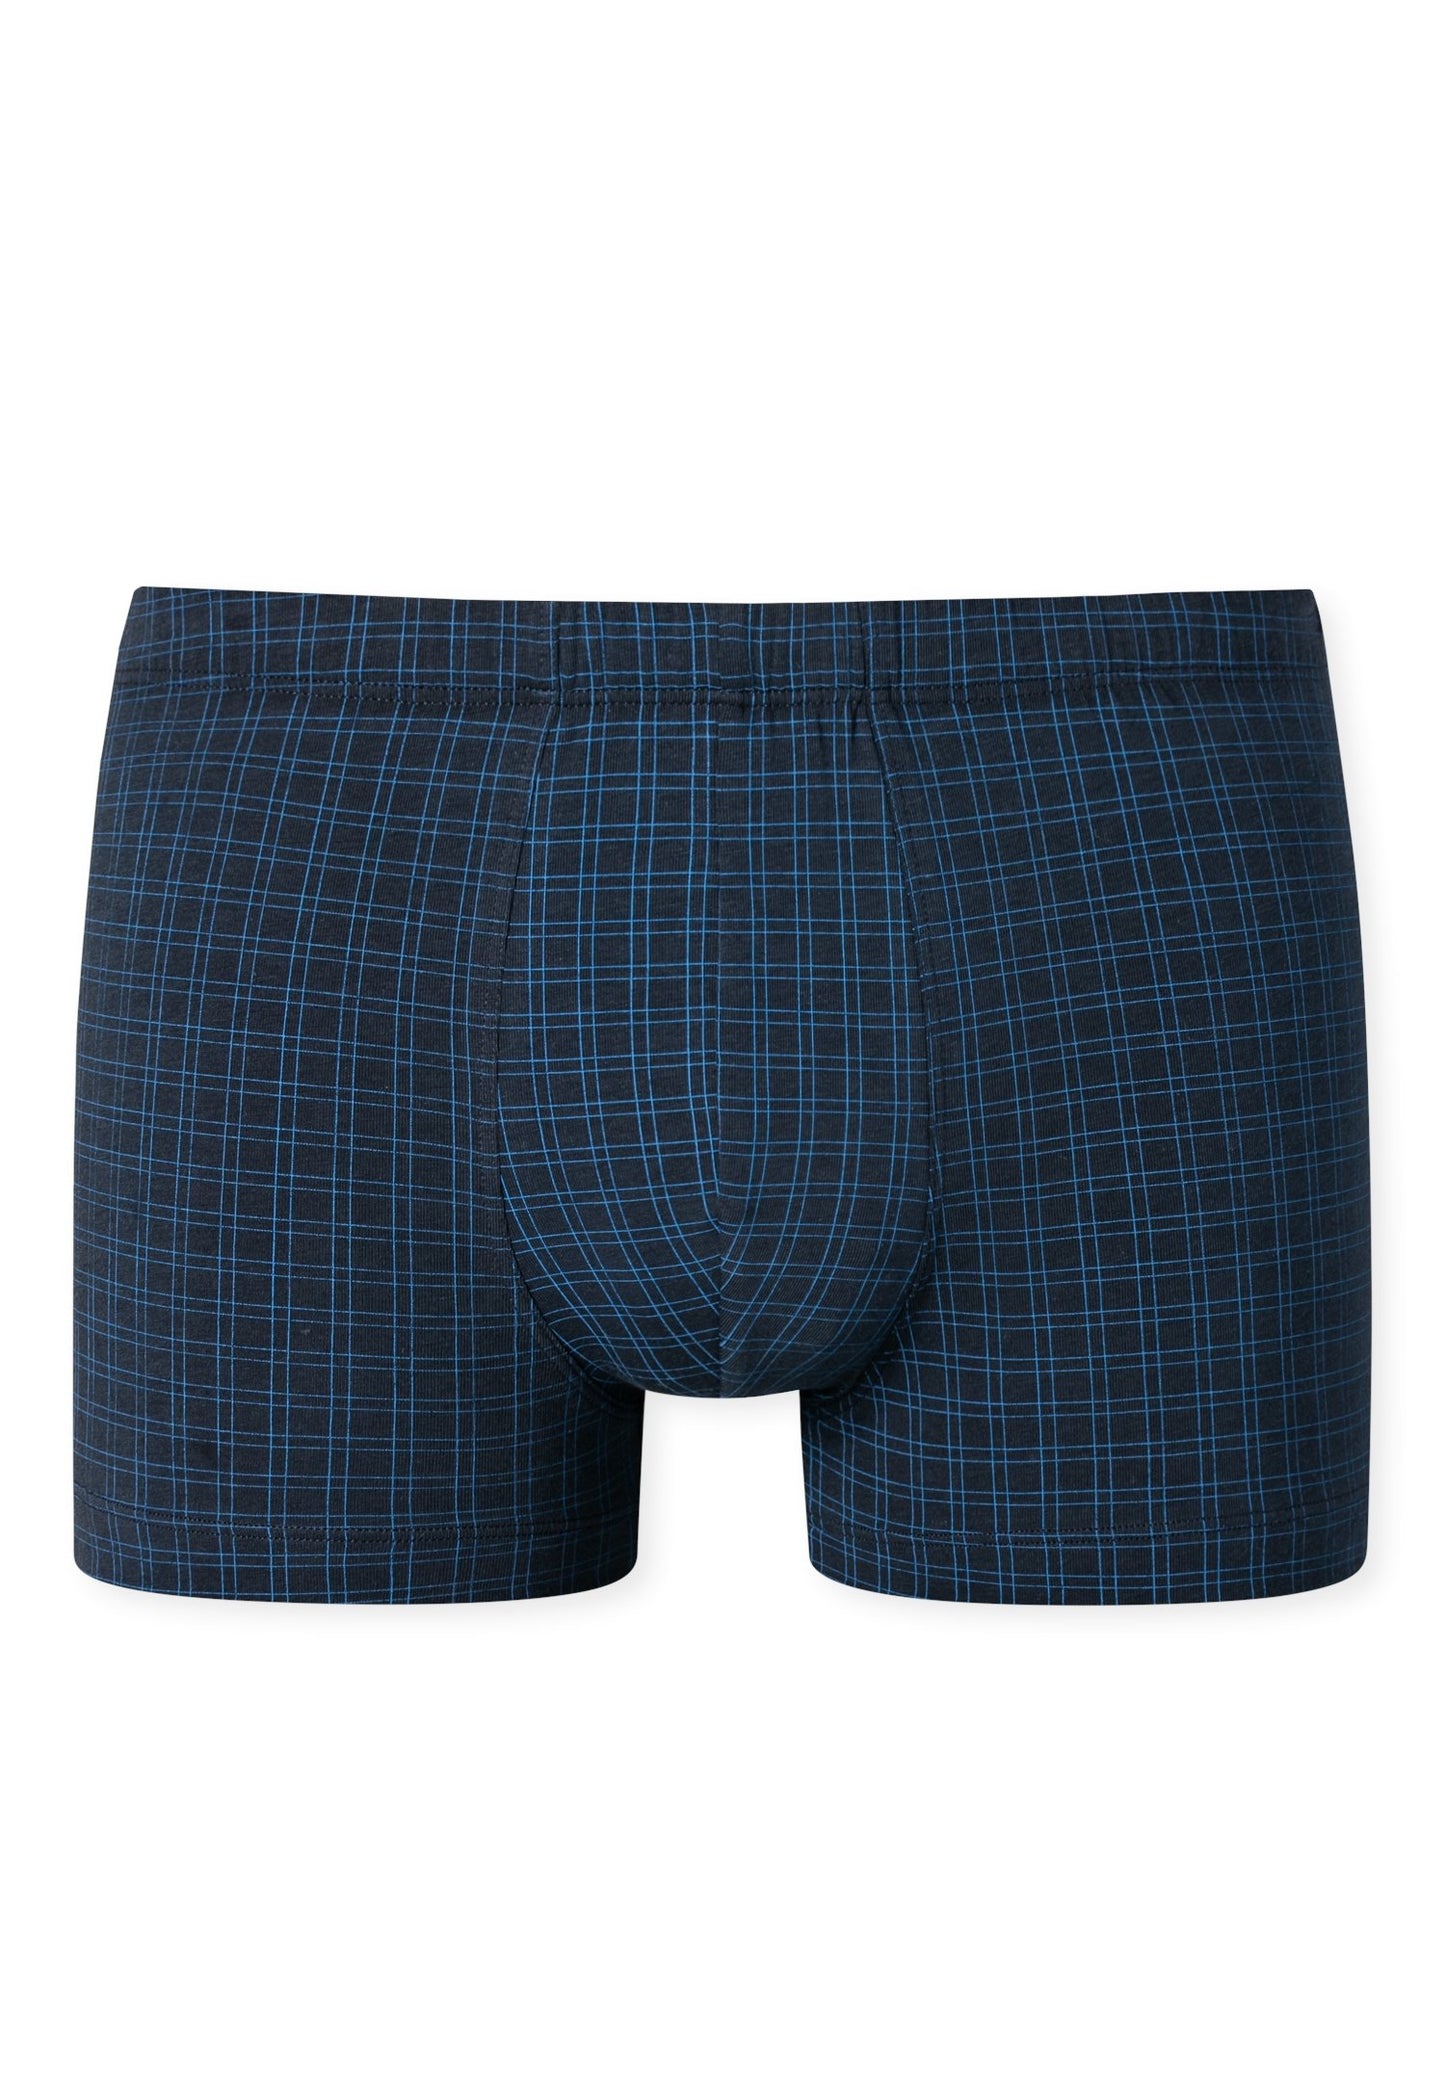 Shorts (Dunkelblau)